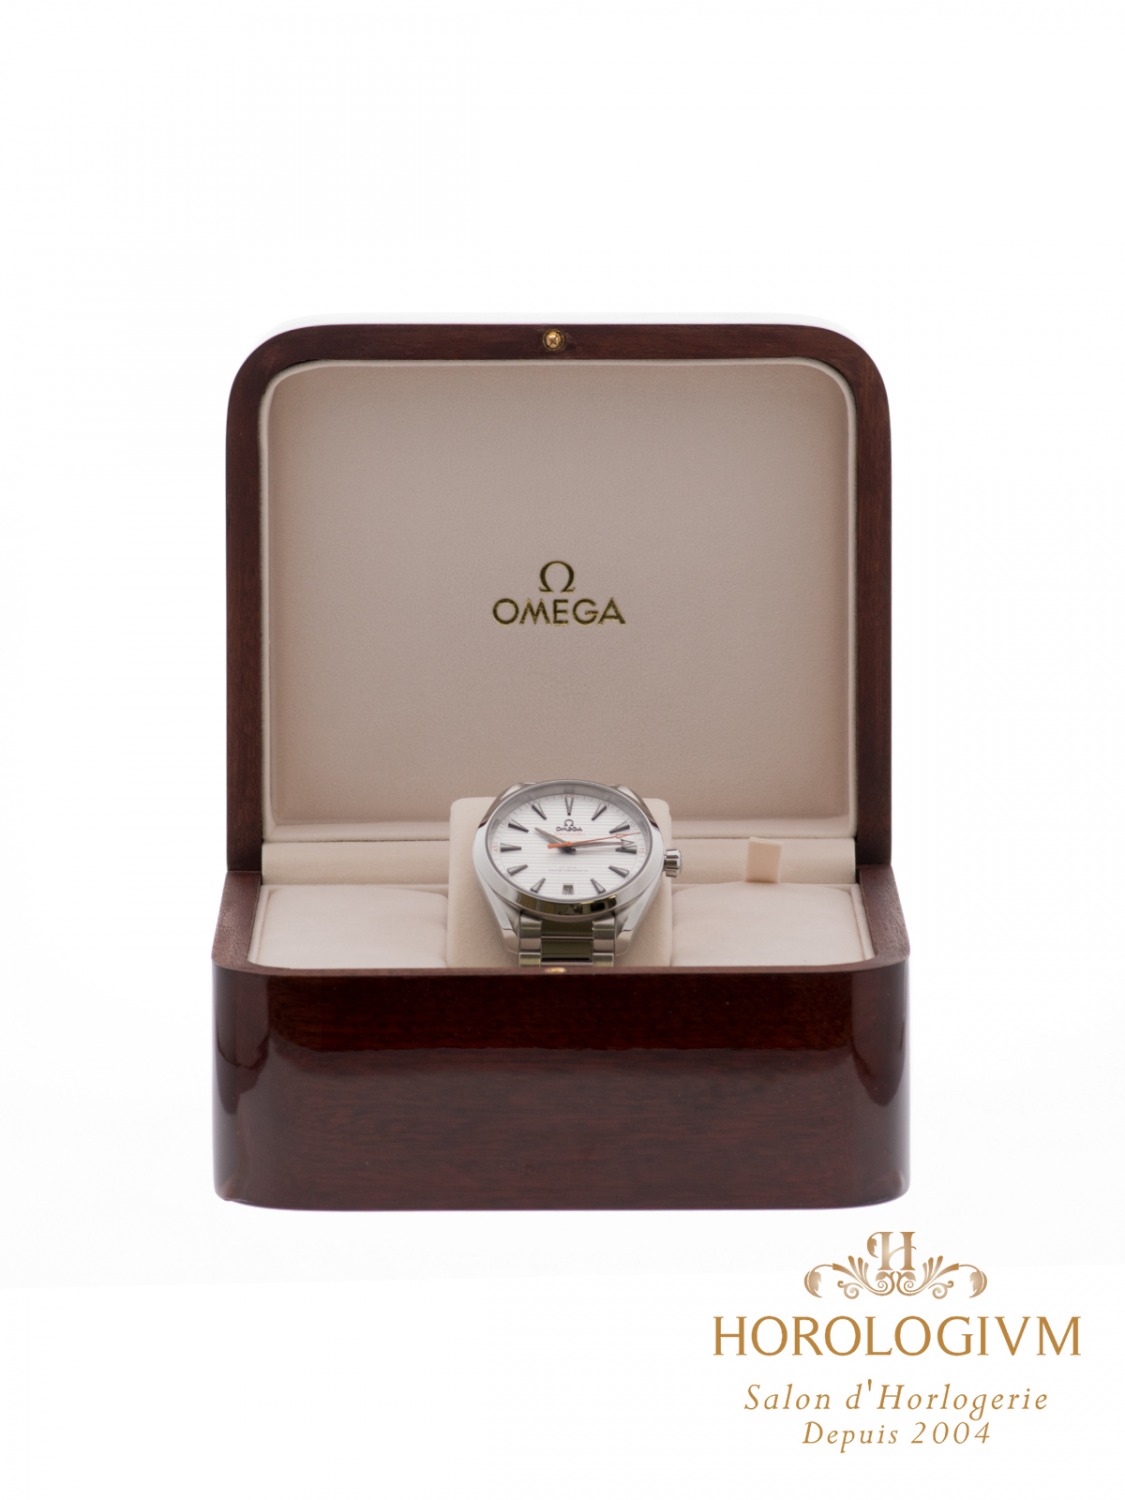 Omega Seamaster Master Chronometer Aqua Terra 150M REF. 22010412102001 watch, silver